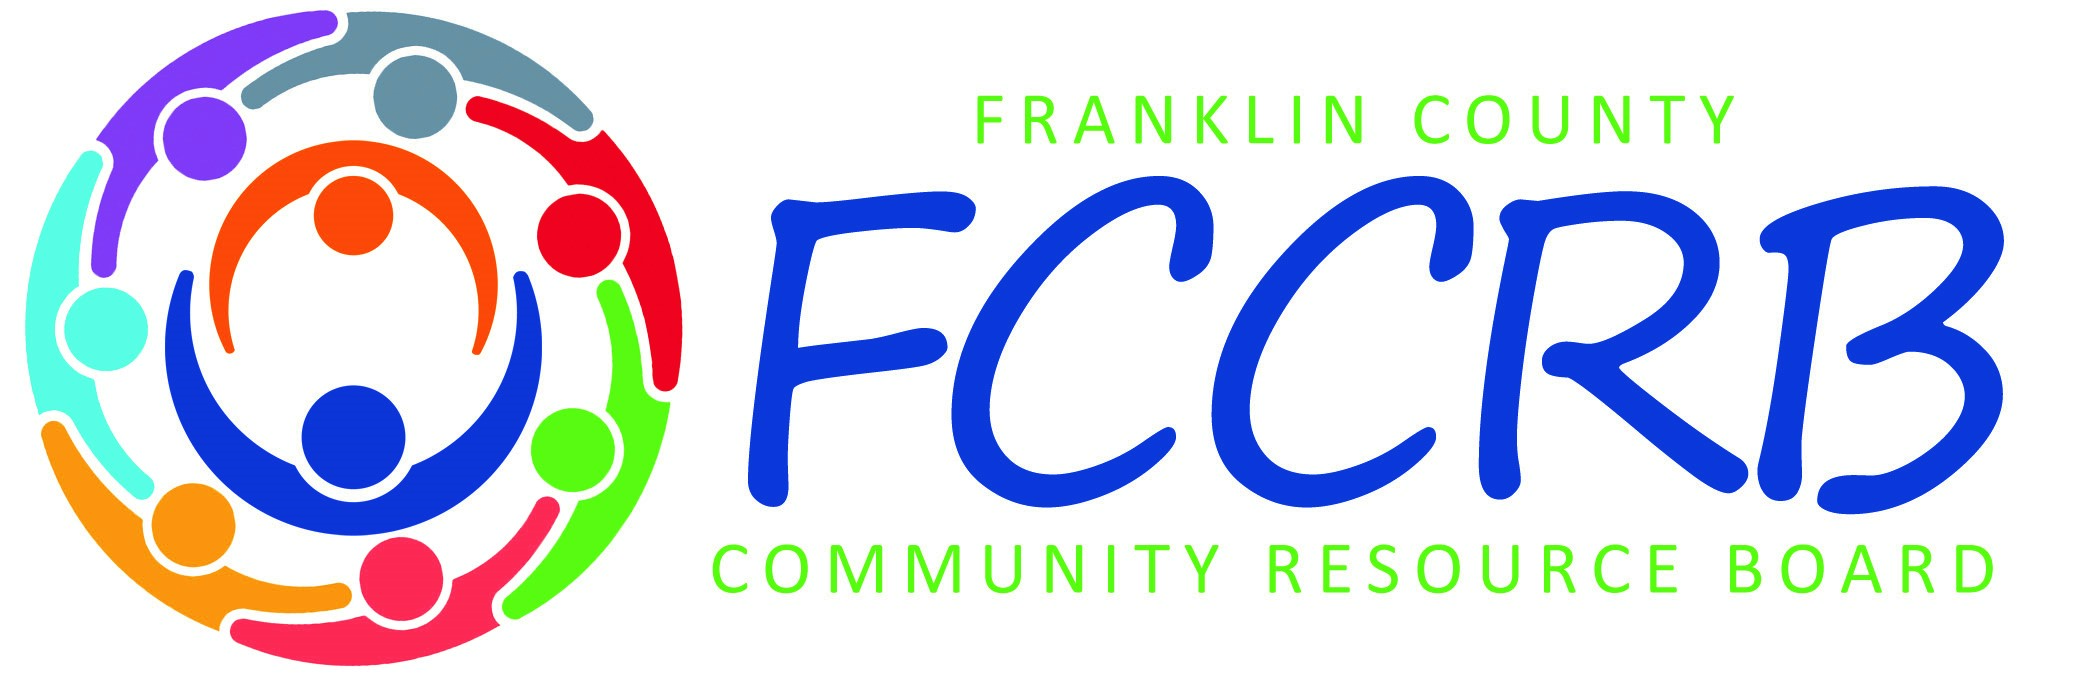 Franklin County Community Resource logo